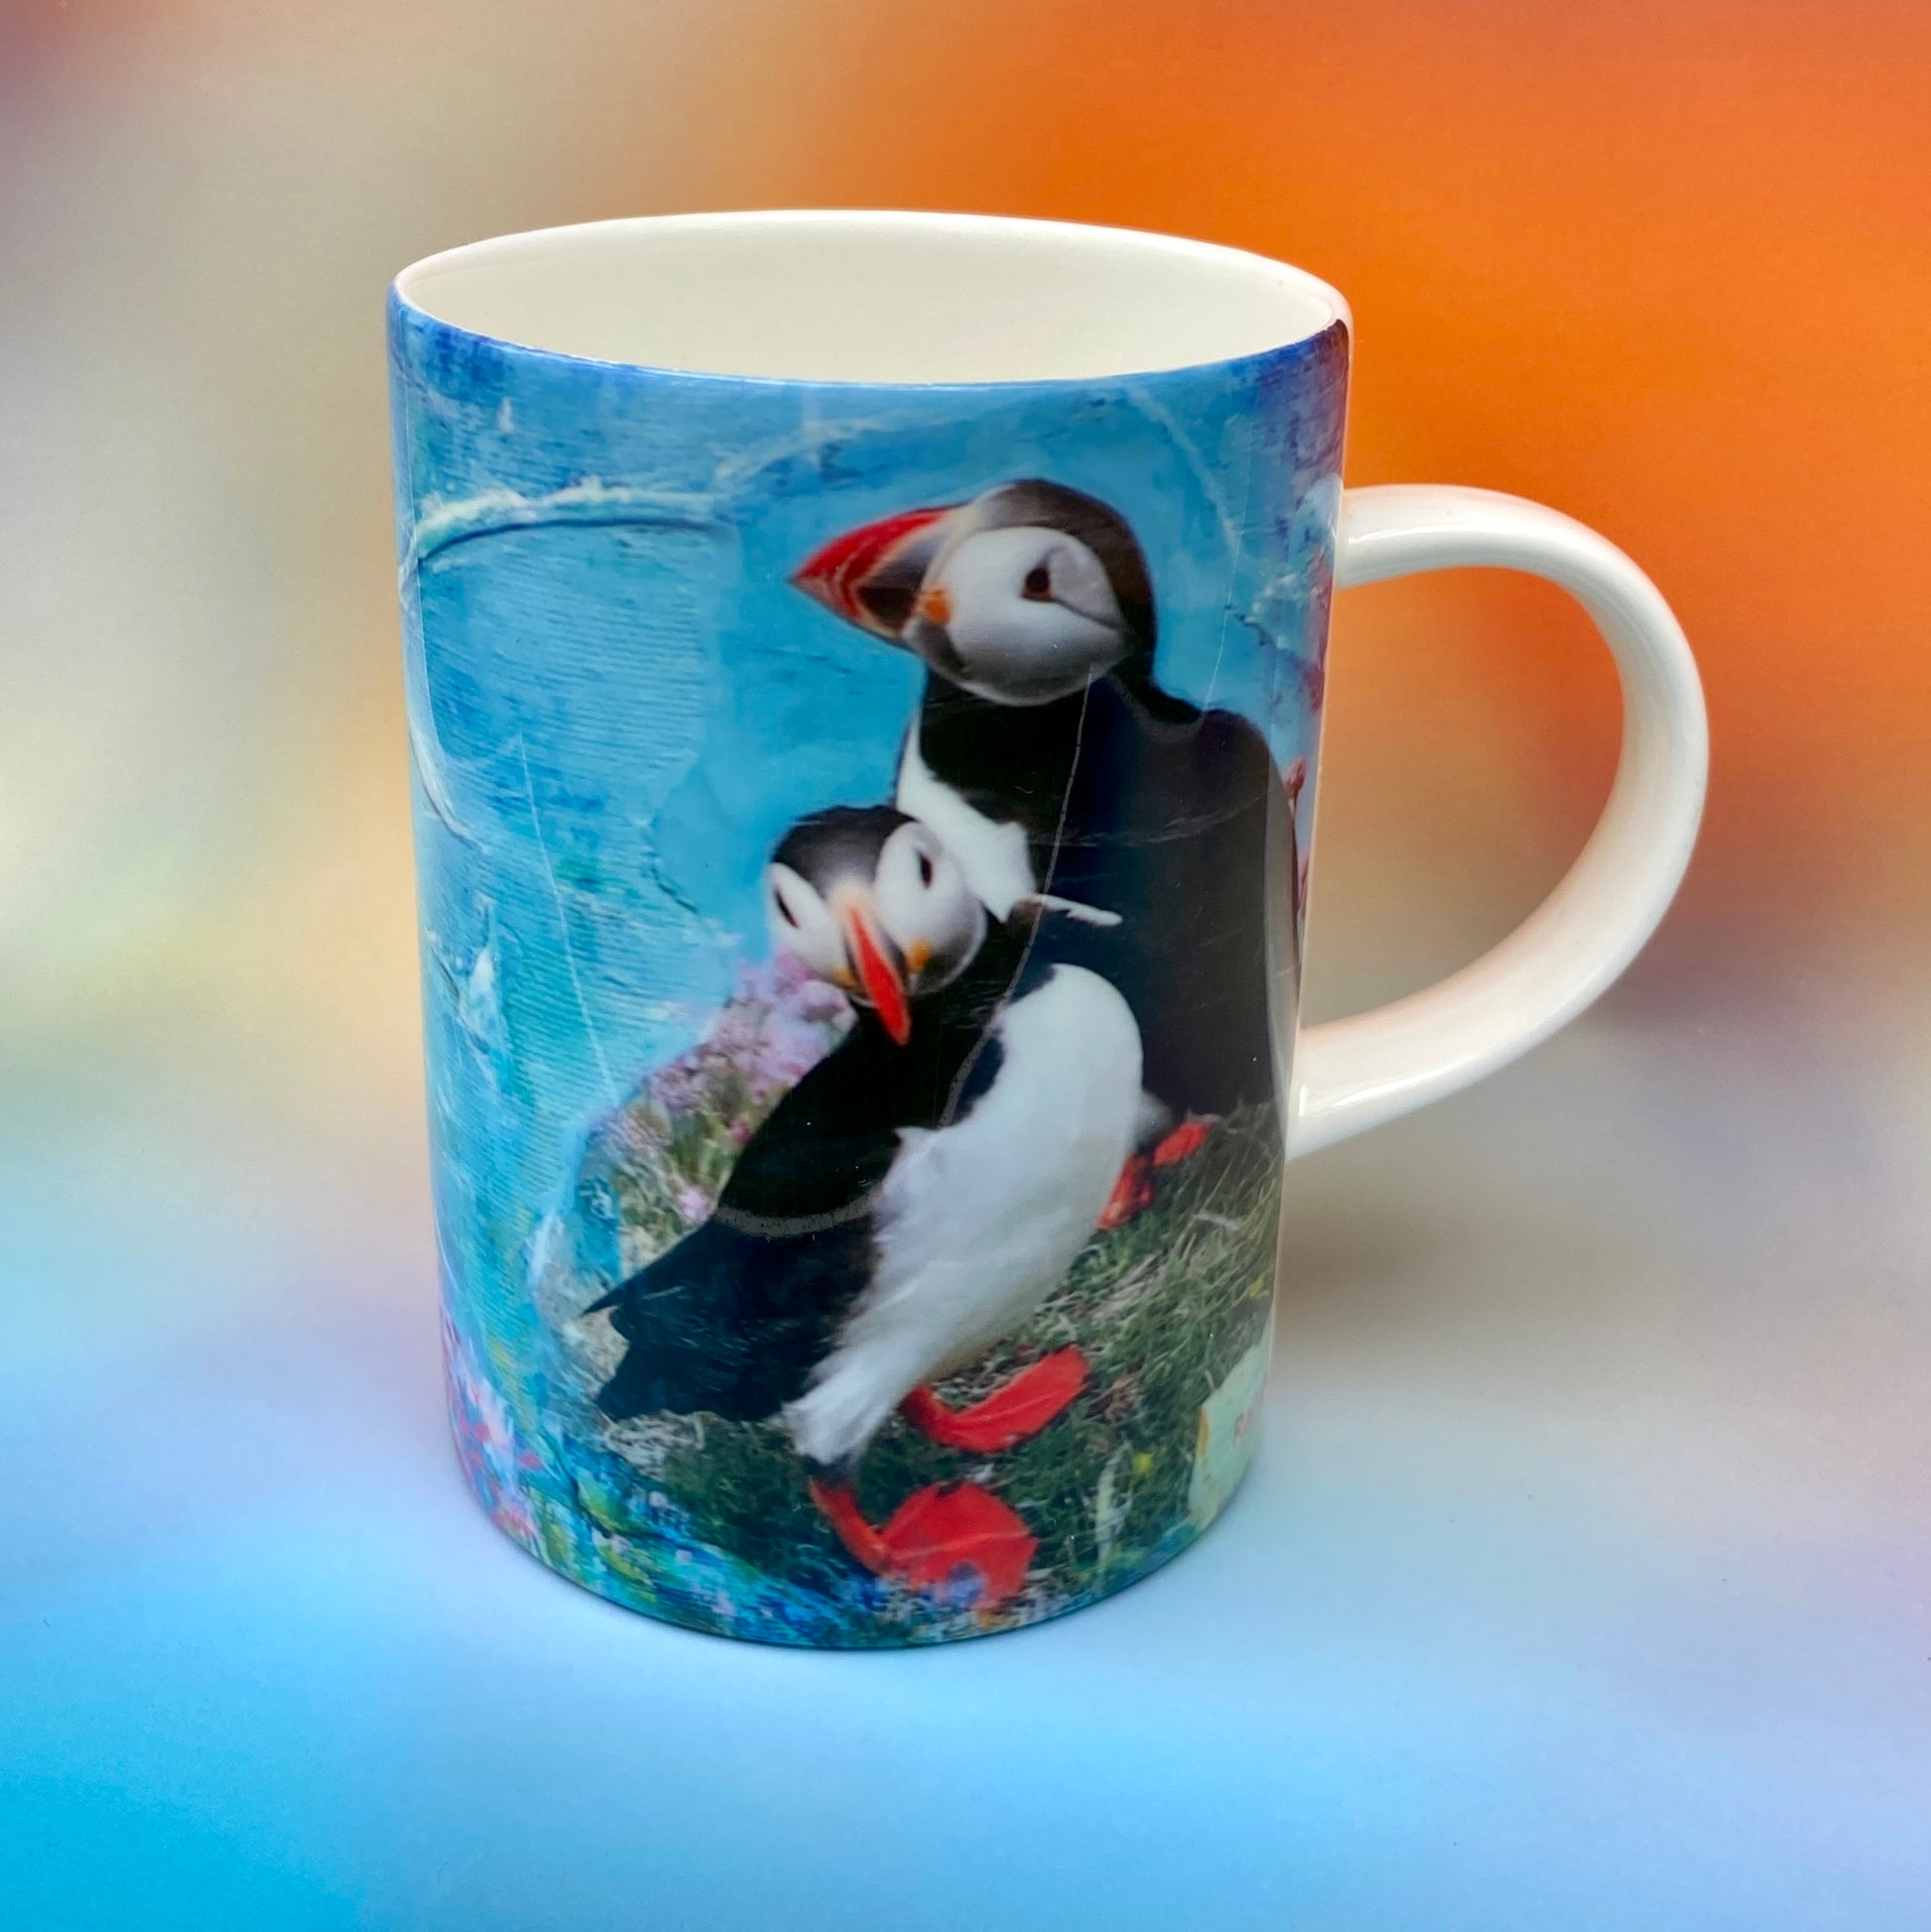 Puffins mug by Orkney artist Jane Glue, Scotland